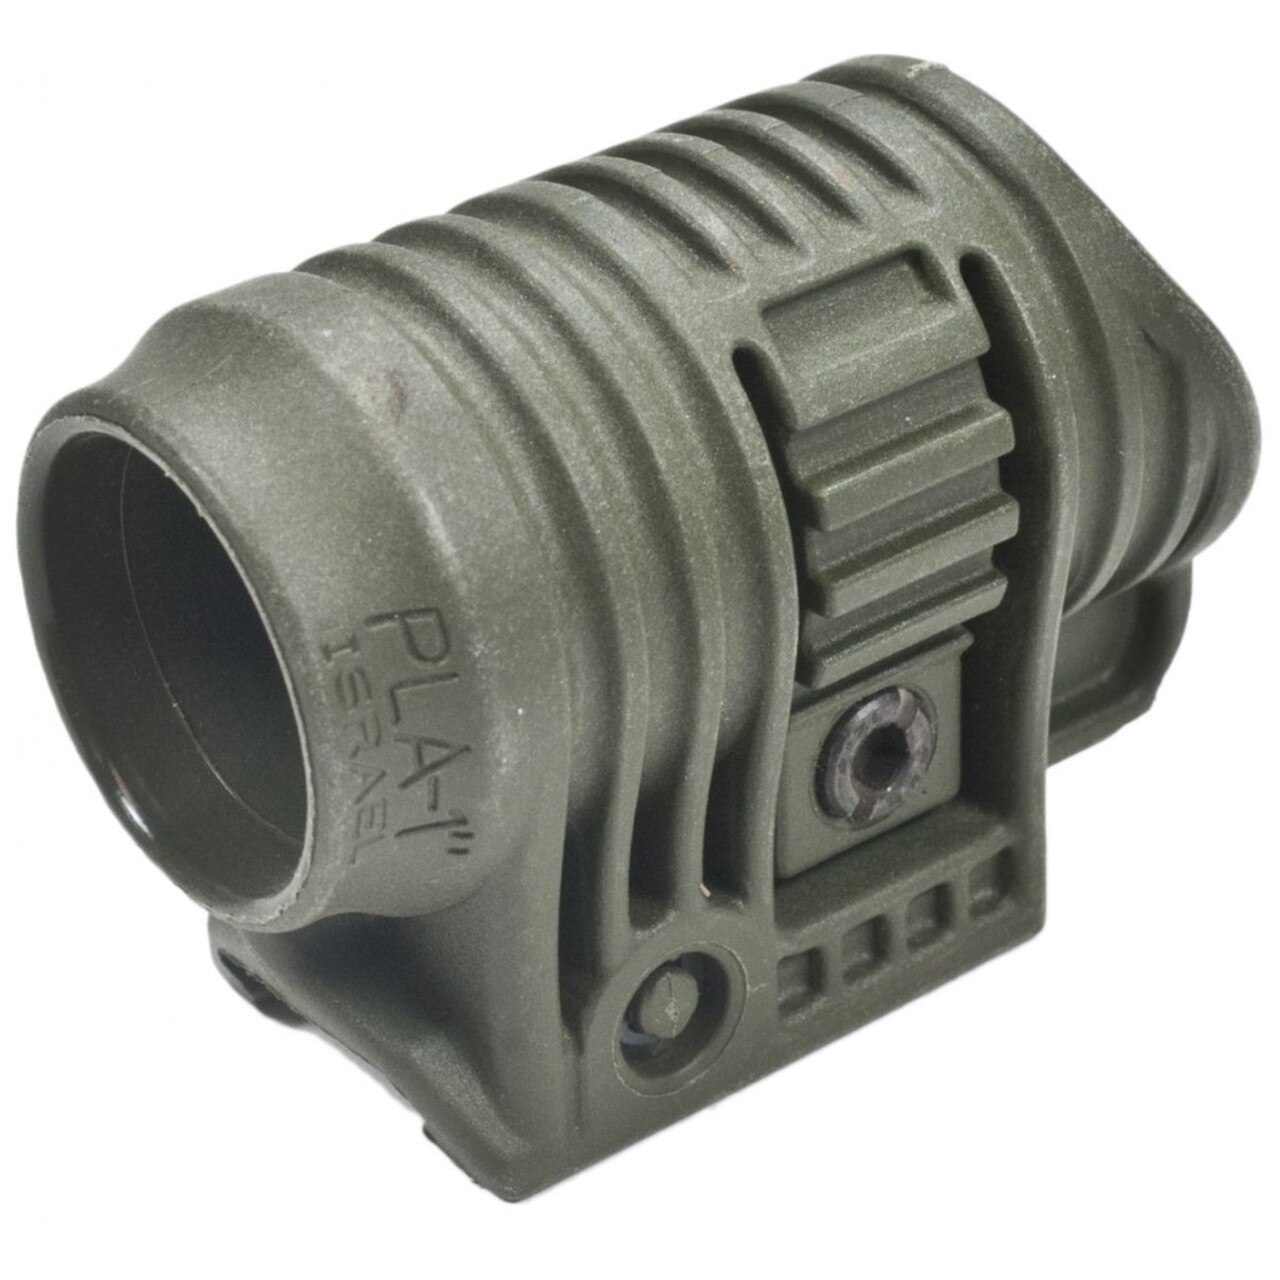 FAB Defense PLA Flashlight and Laser Adapter 25 cm - OD